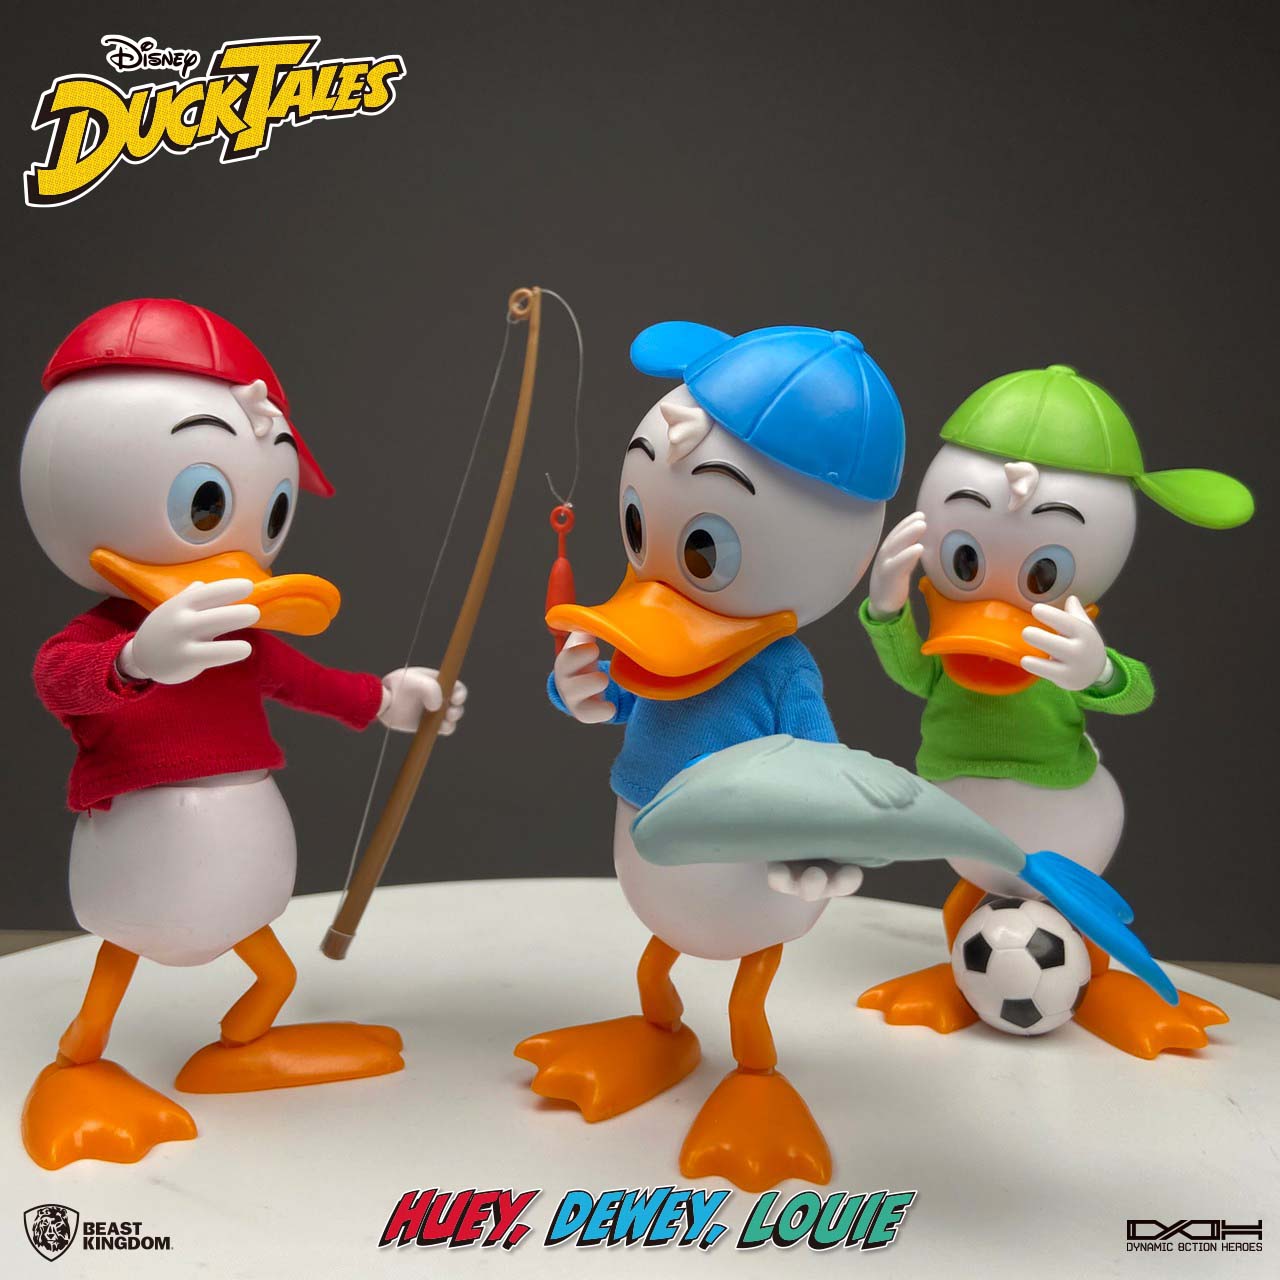 DuckTales, Meet Huey, Dewey and Louie